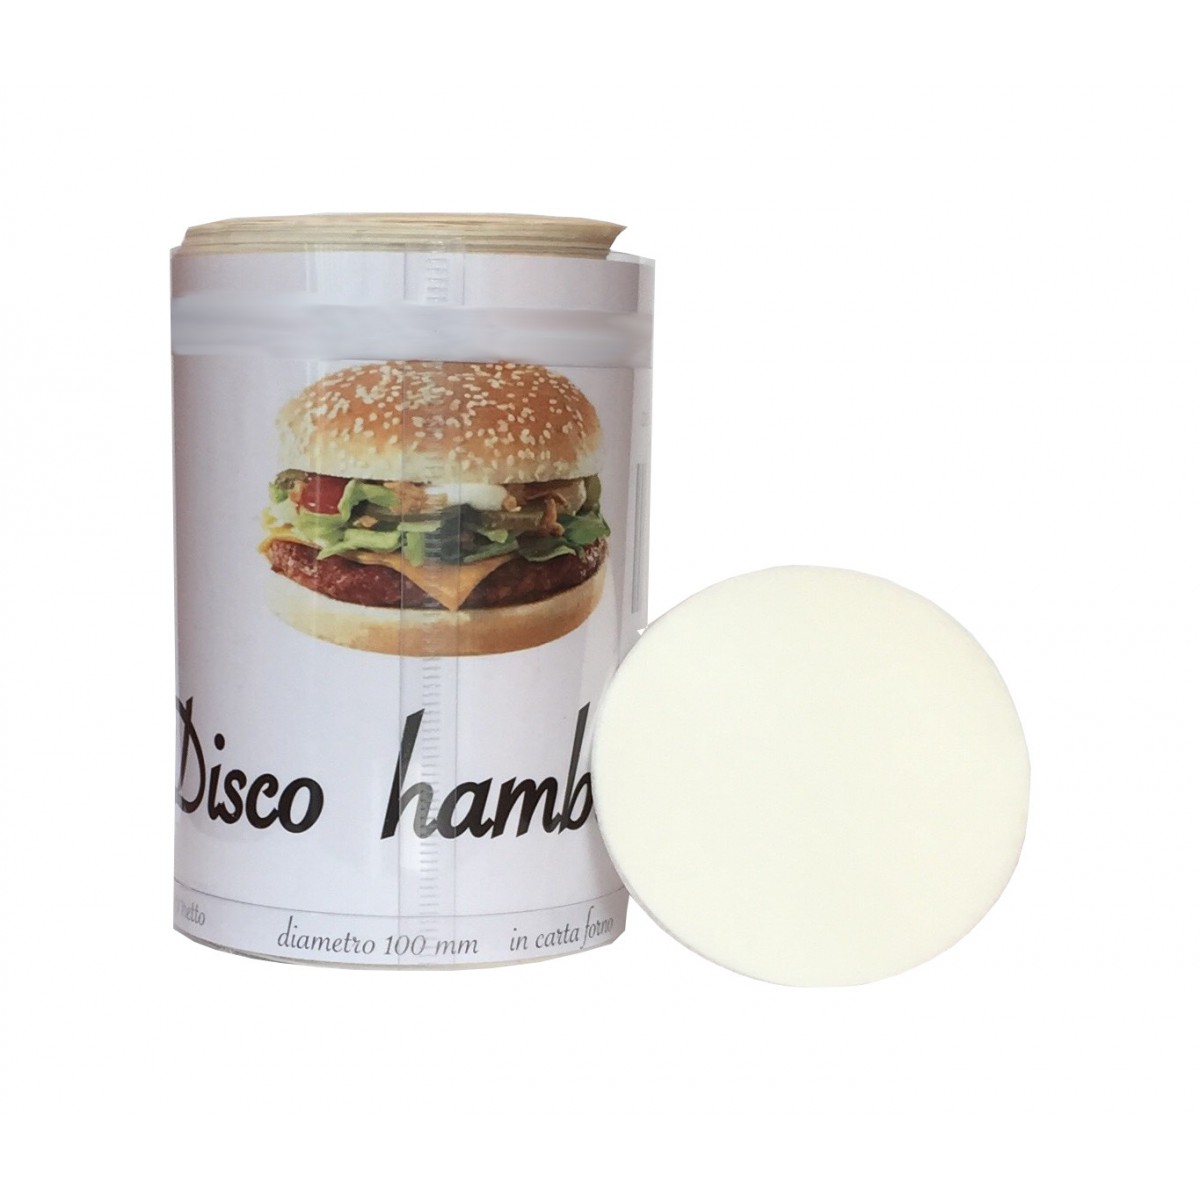 https://www.prodecmp.it/584-large_default/dischi-svizzera-hamburger-in-carta-da-forno.jpg